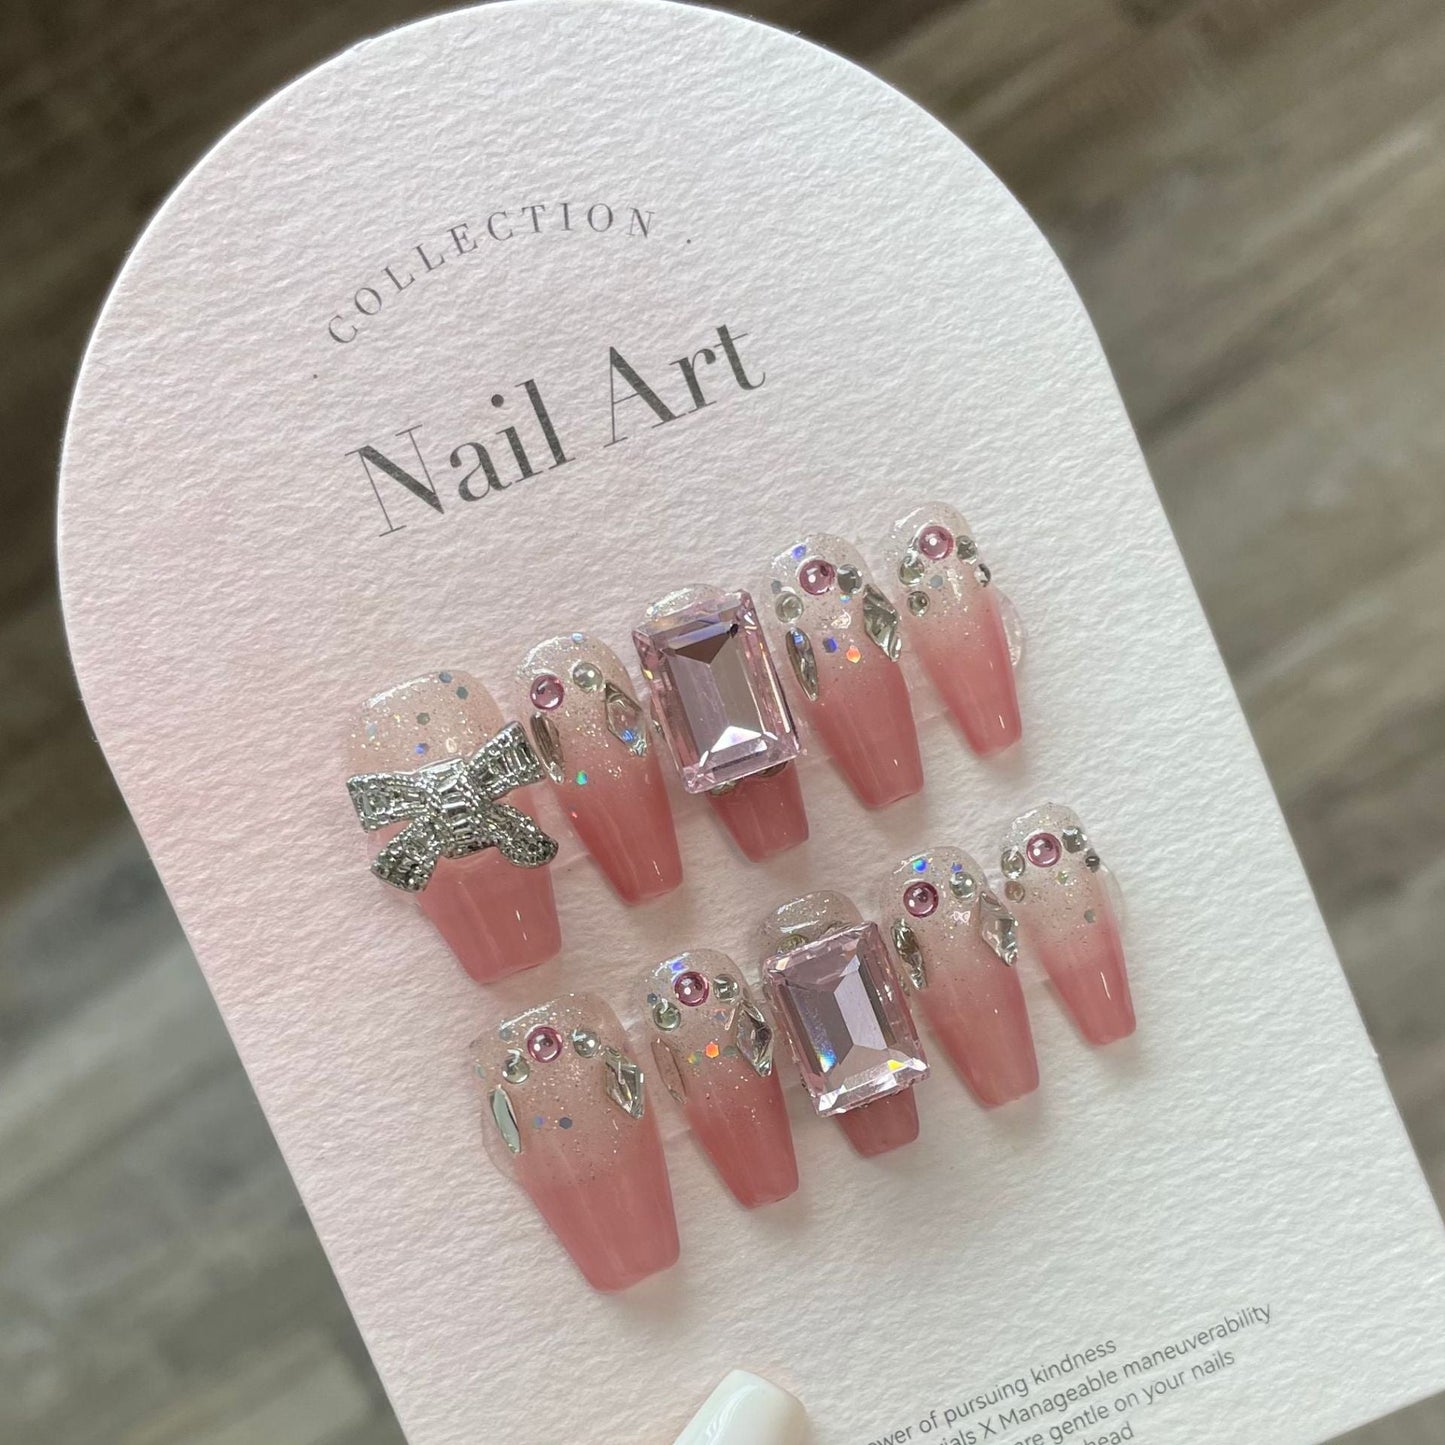 777 Rhinestone style press on nails 100% handmade false nails nude color pink